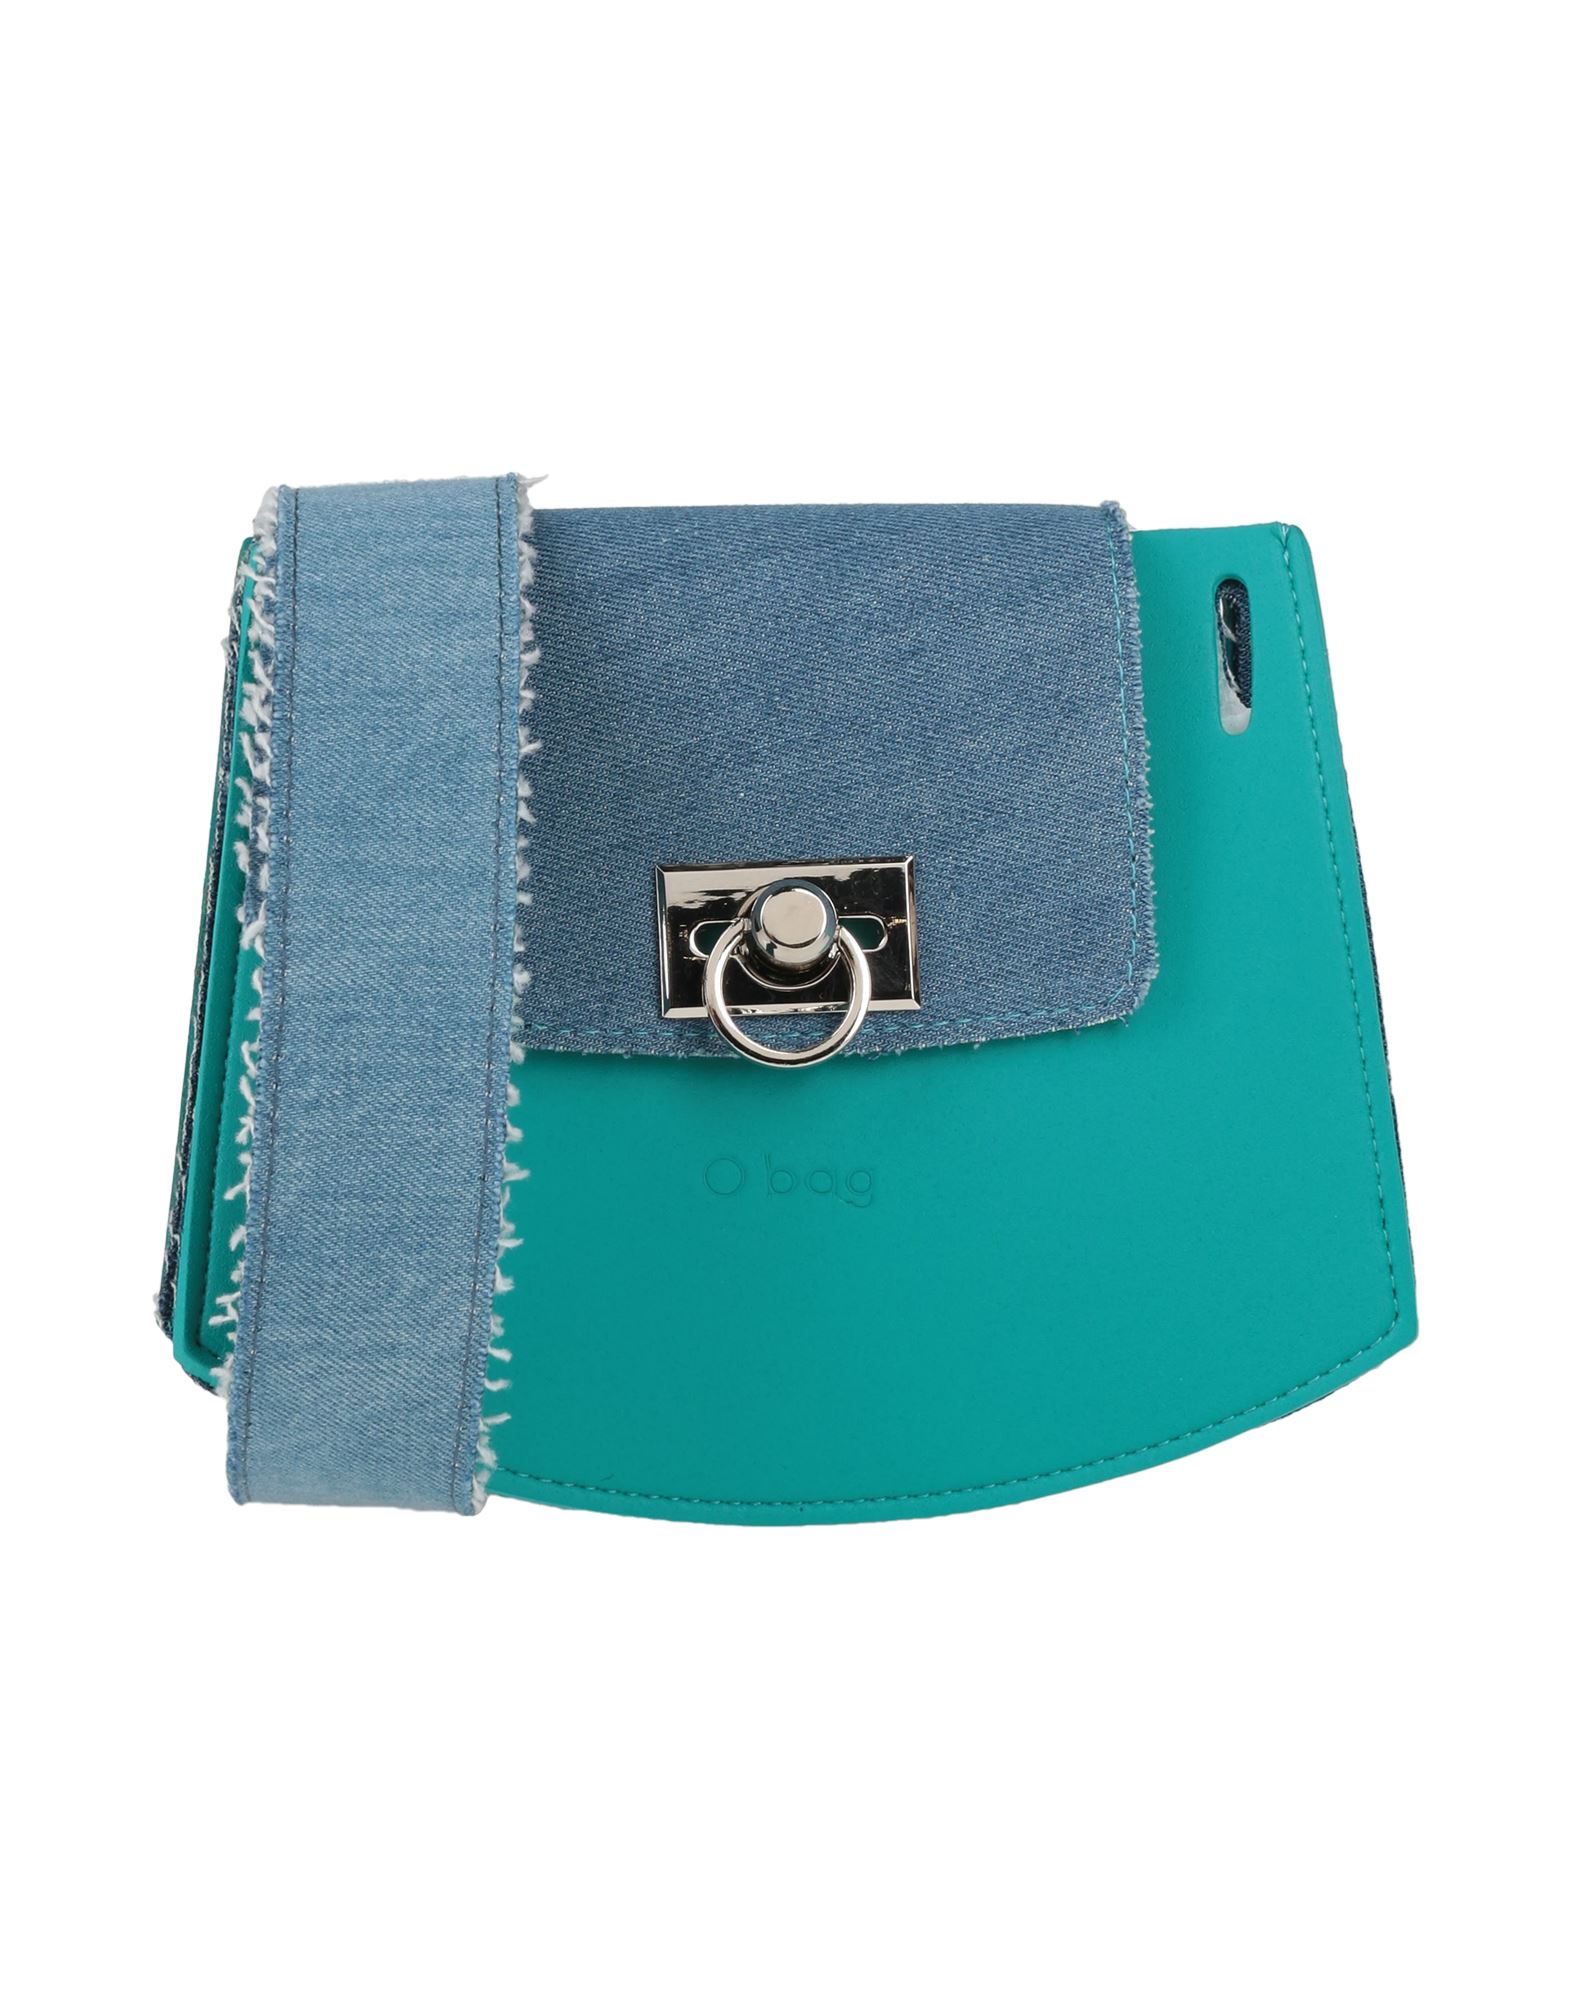 O Bag Handbags In Turquoise